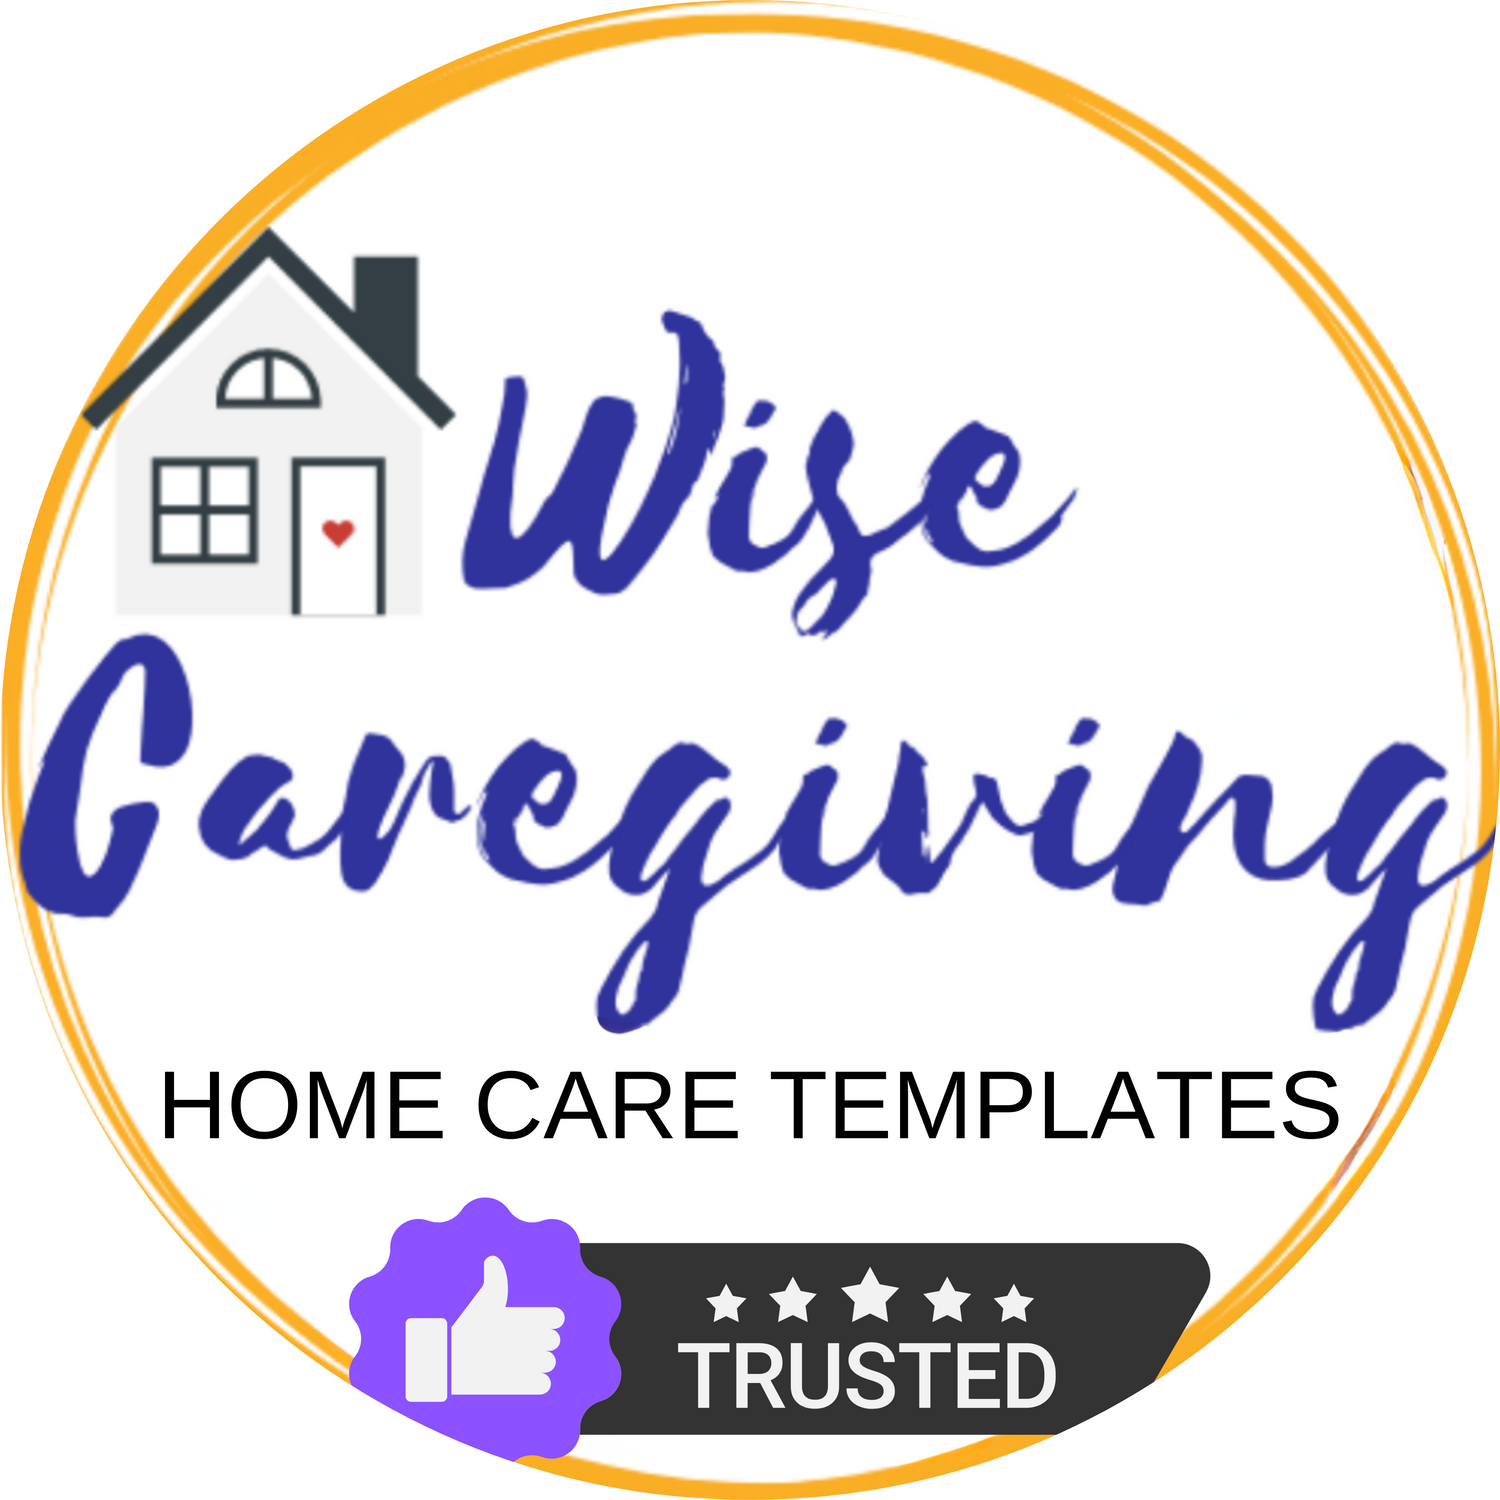 Caregiving Template Shop